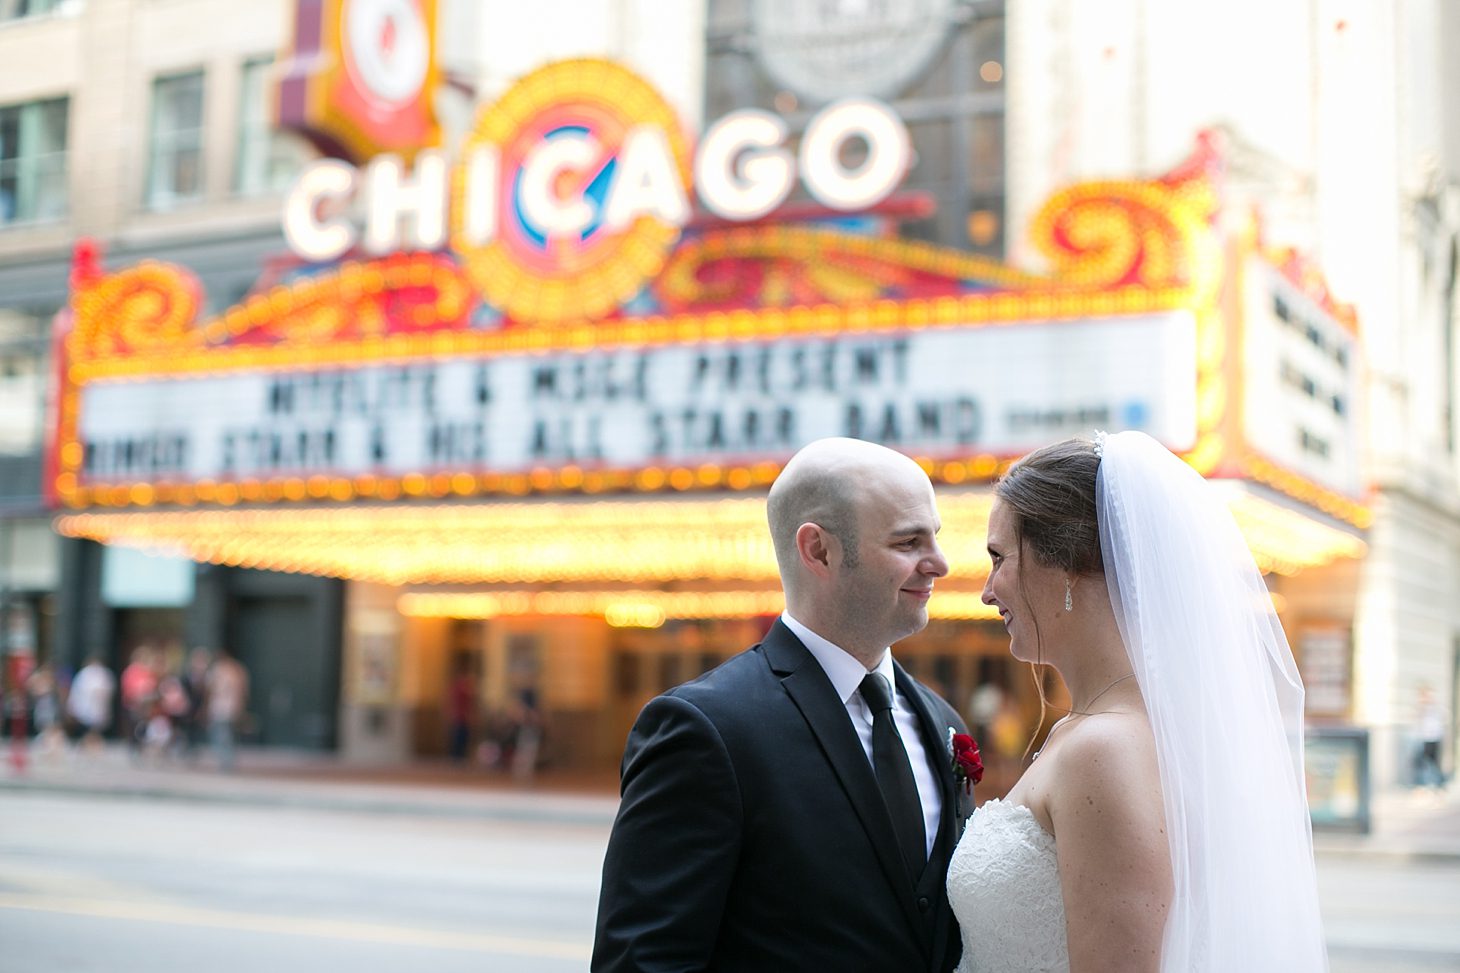 chicago-cultural-center-wedding-photography_0059